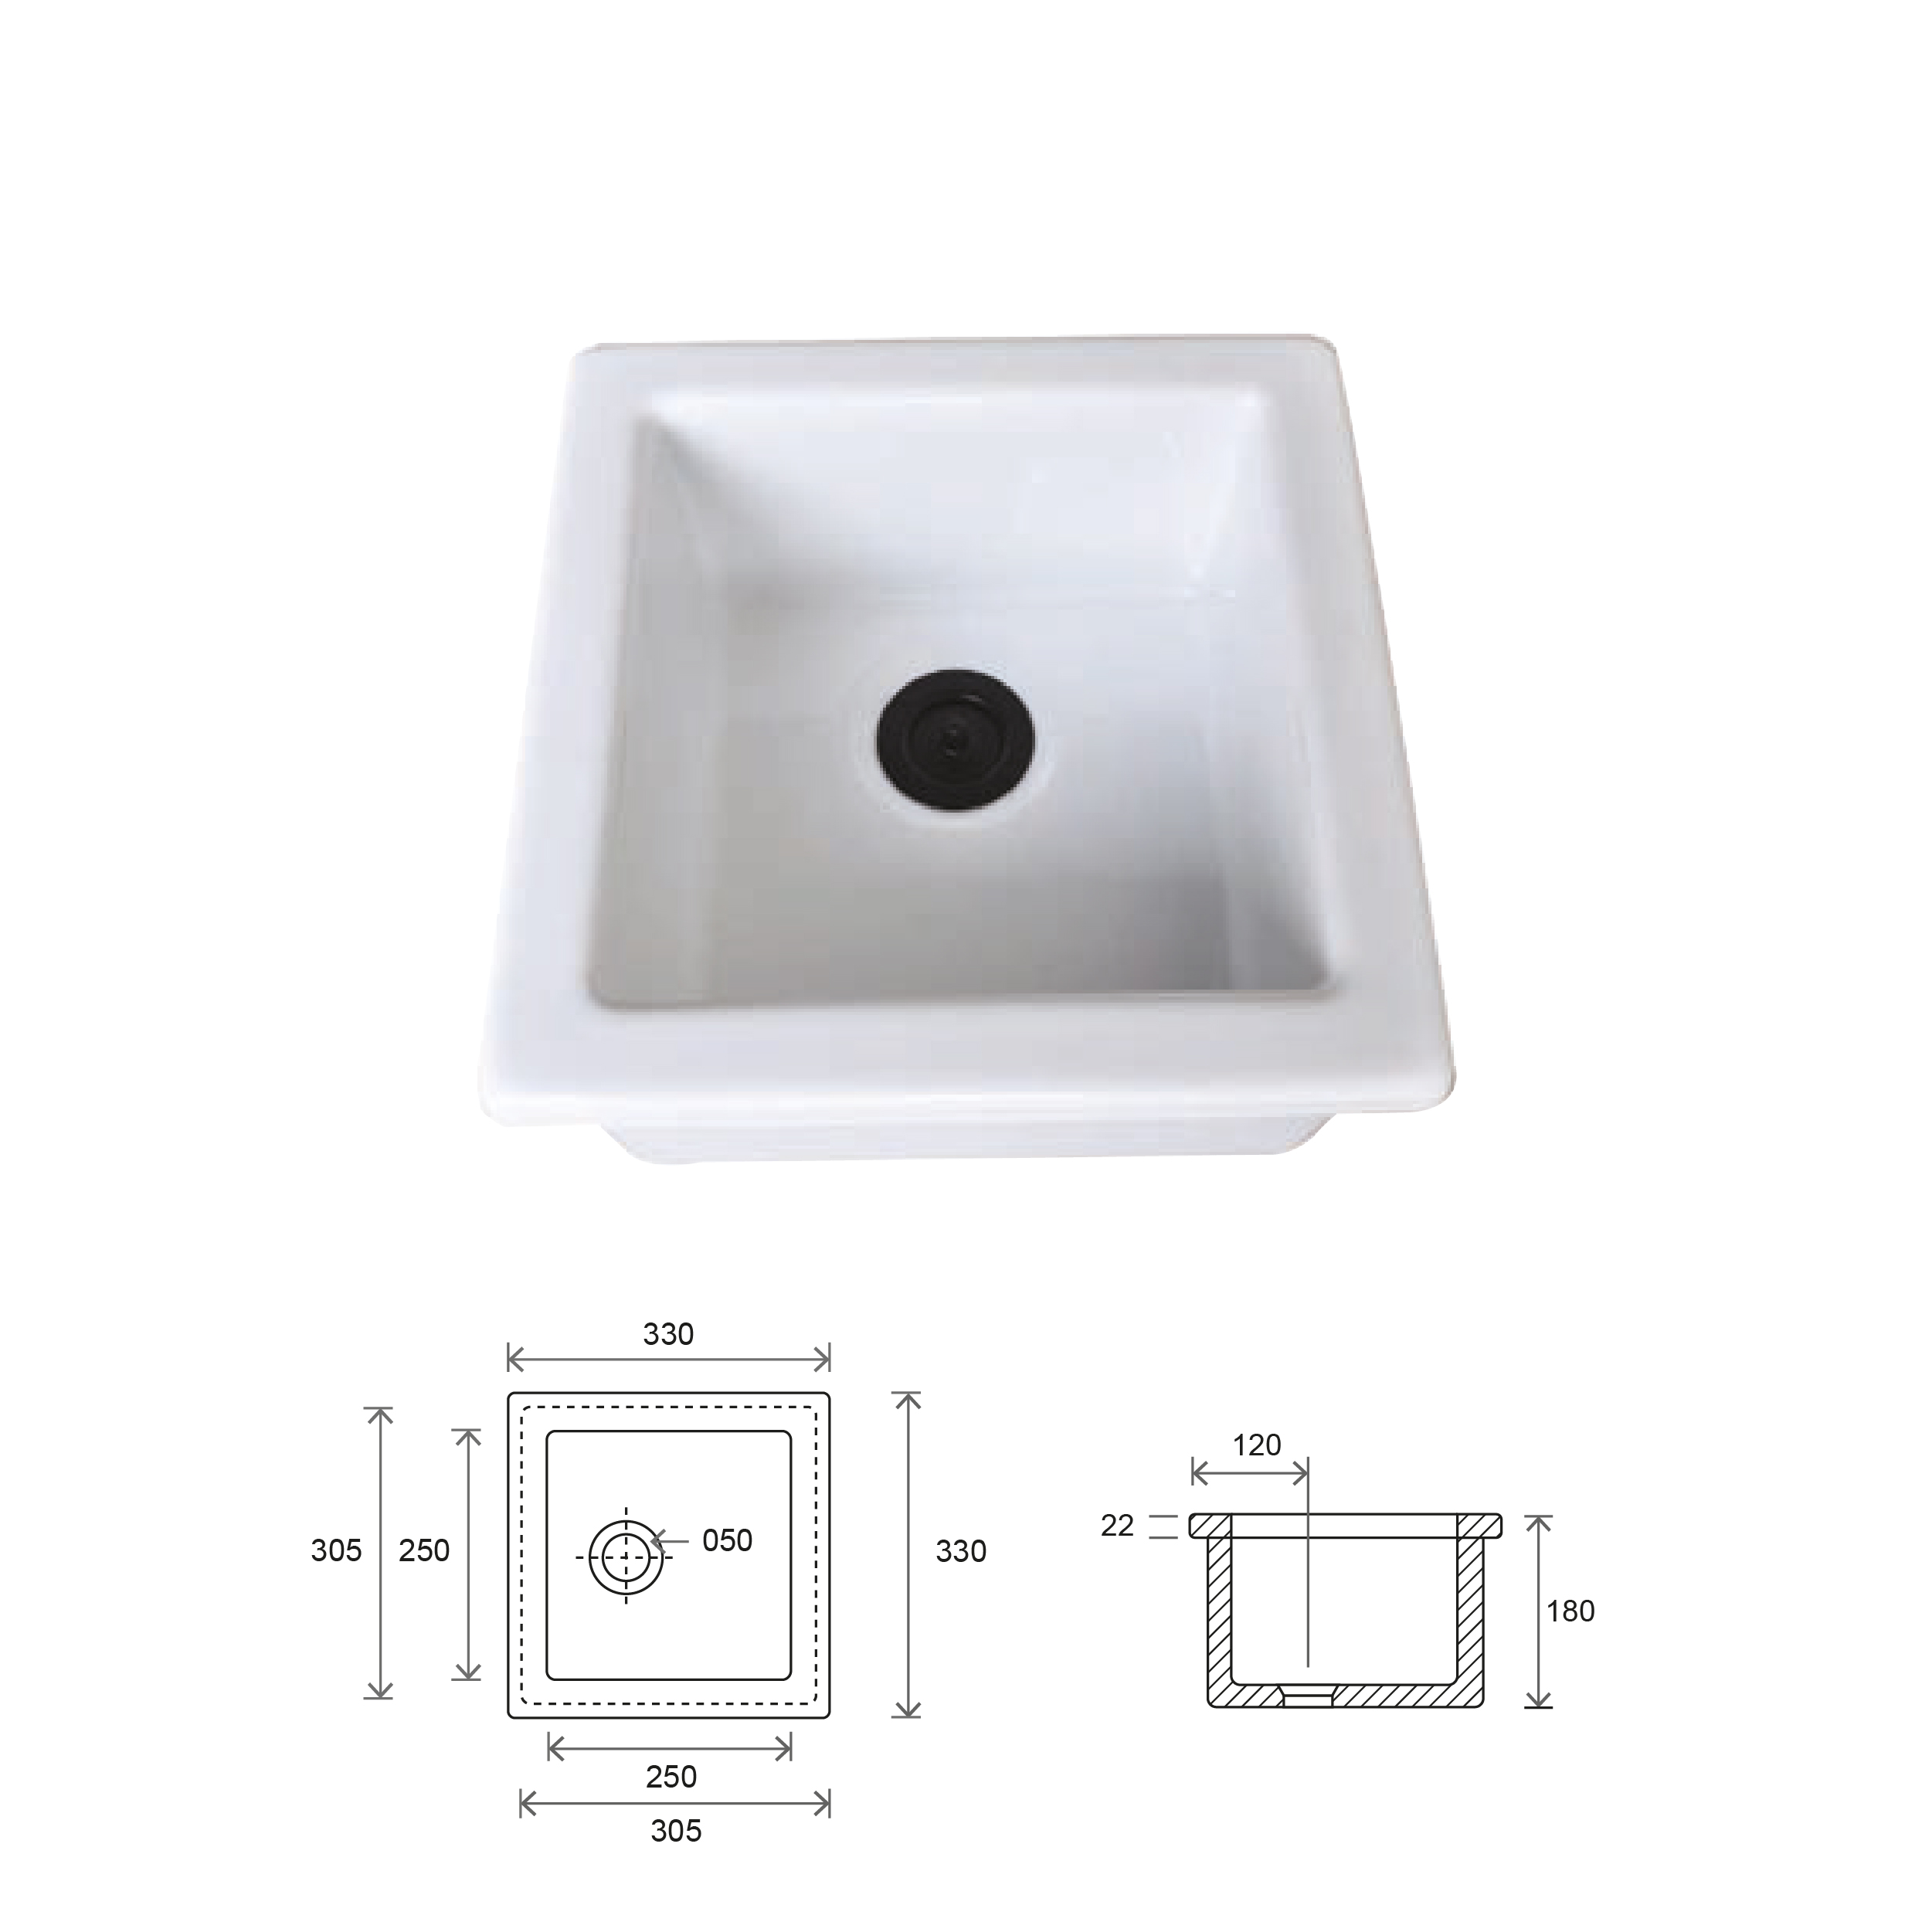 RAK Laboratory Sink (330 x 330 x 180mm)